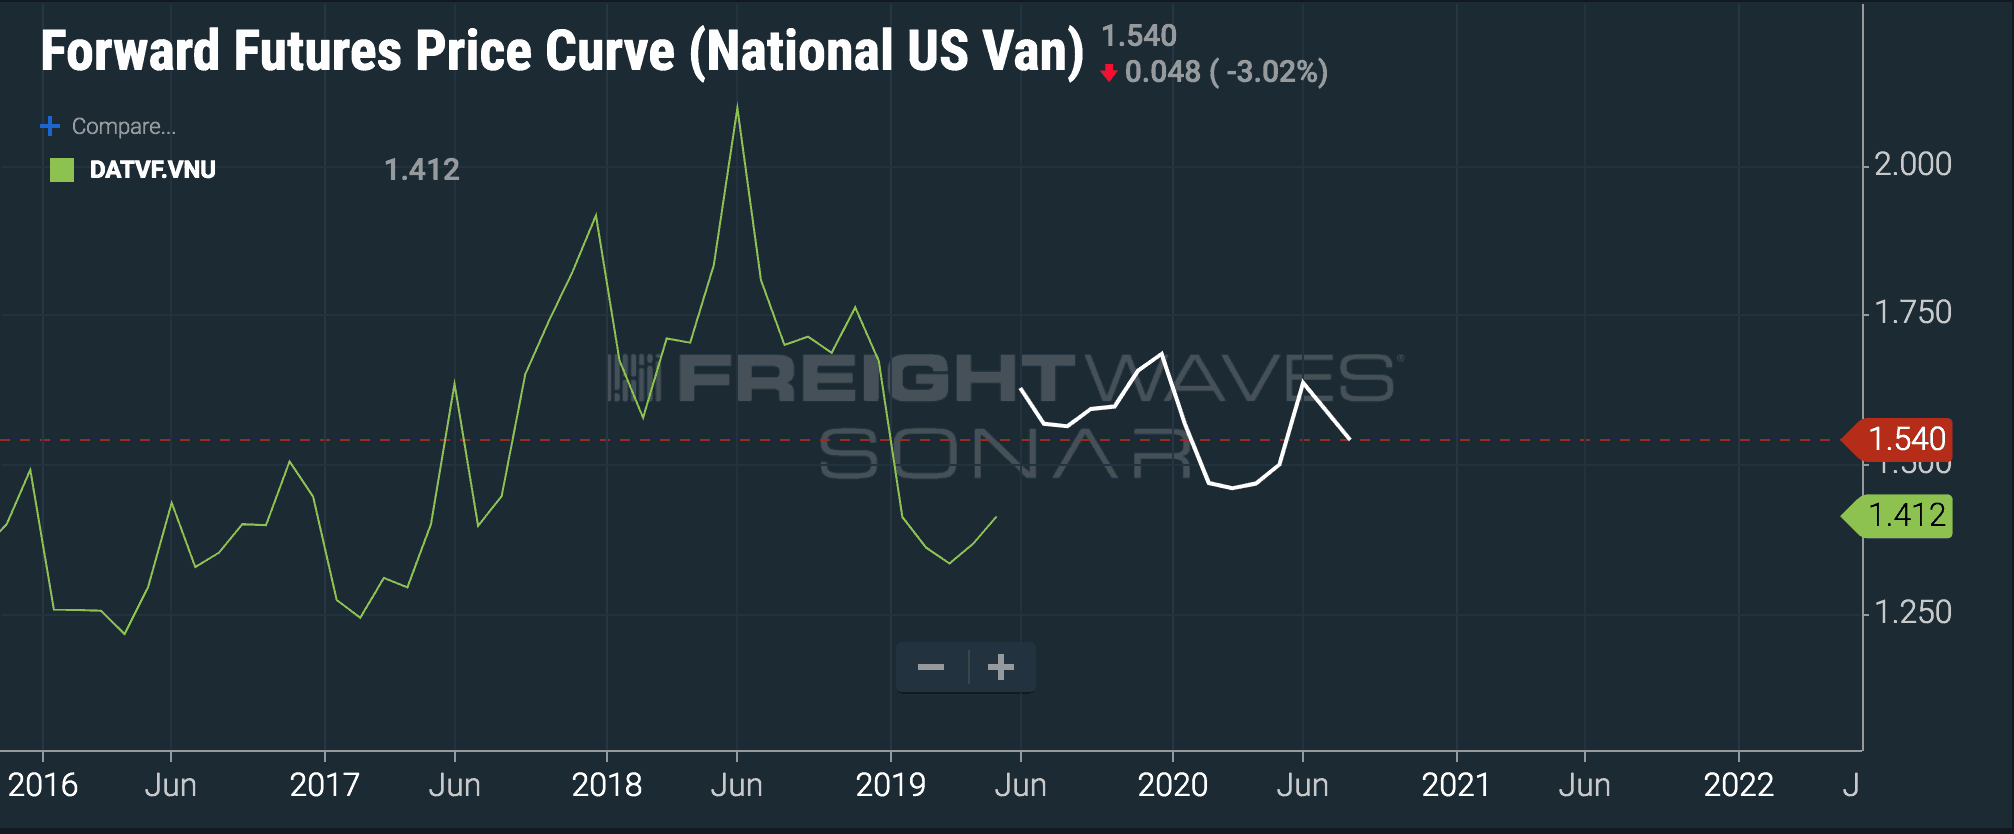 Freight Forward Futures Price Curve (National US Van)